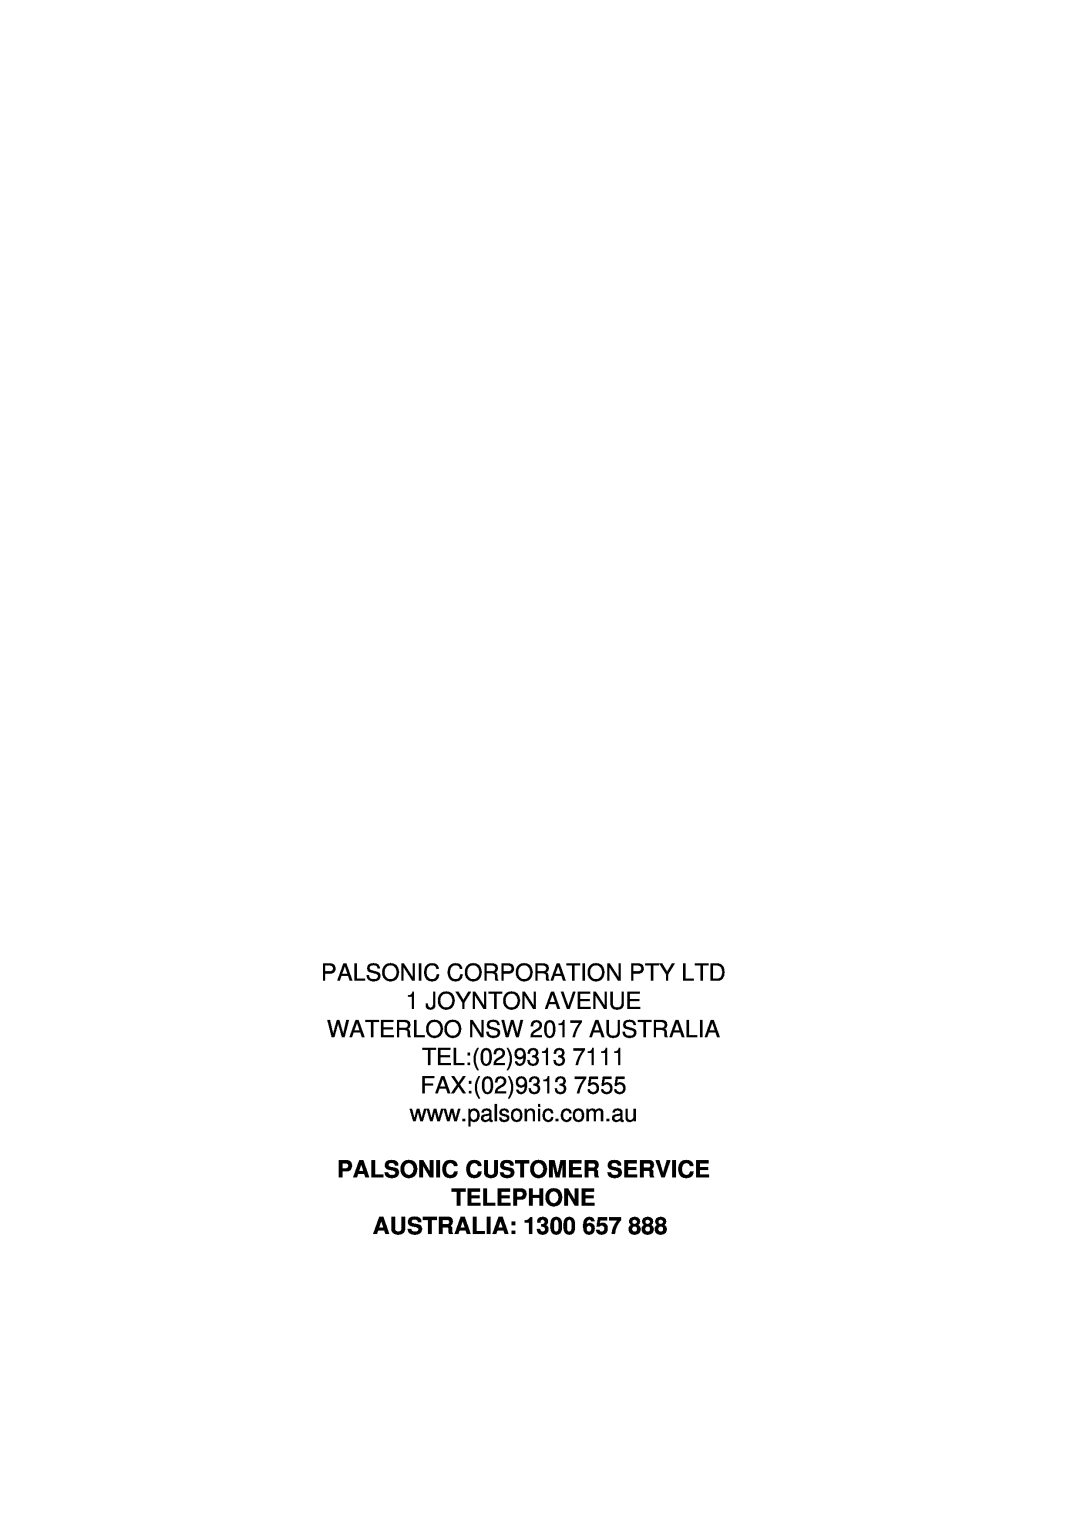 Palsonic PMO-758 manual WATERLOO NSW 2017 AUSTRALIA TEL, Palsonic Customer Service Telephone, Australia 